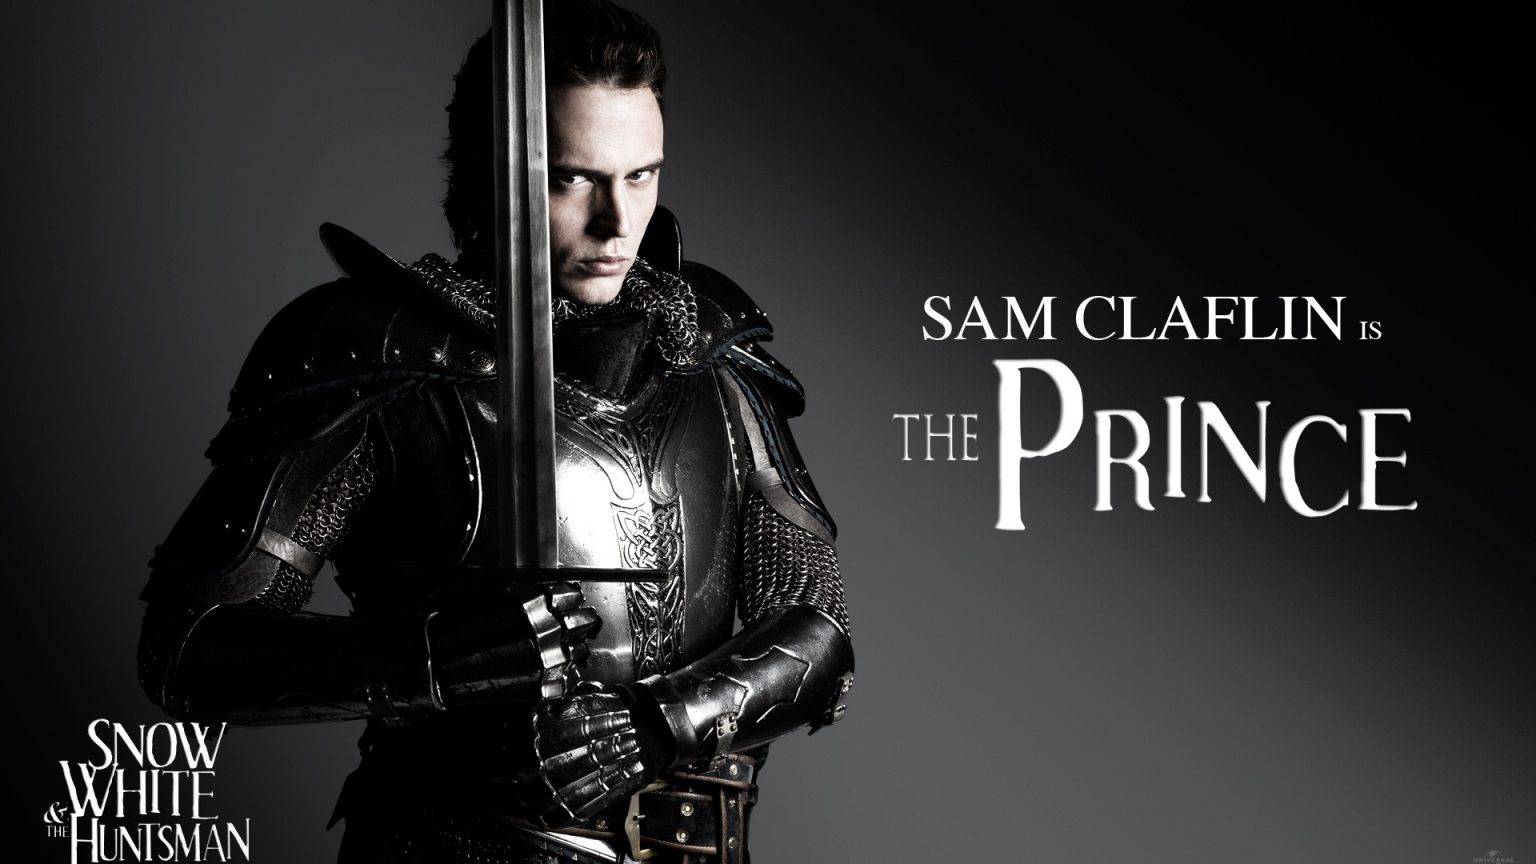 Sam Claflin The Prince for 1536 x 864 HDTV resolution